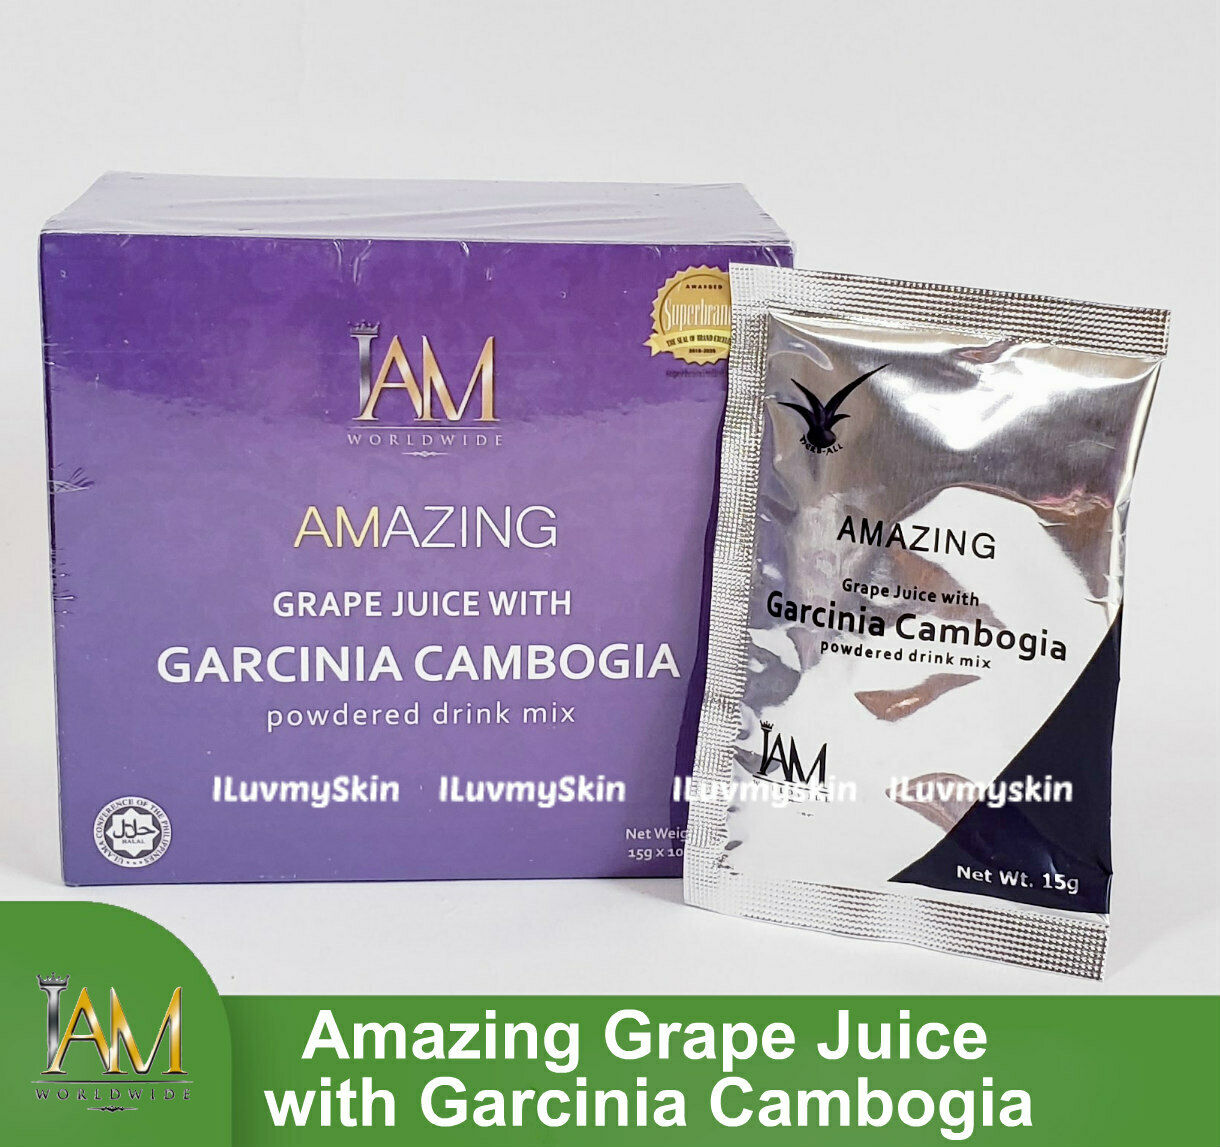 Iam Worldwide Amazing Grape Juice With Garcinia Cambogia 1 Box (10 Sachets)